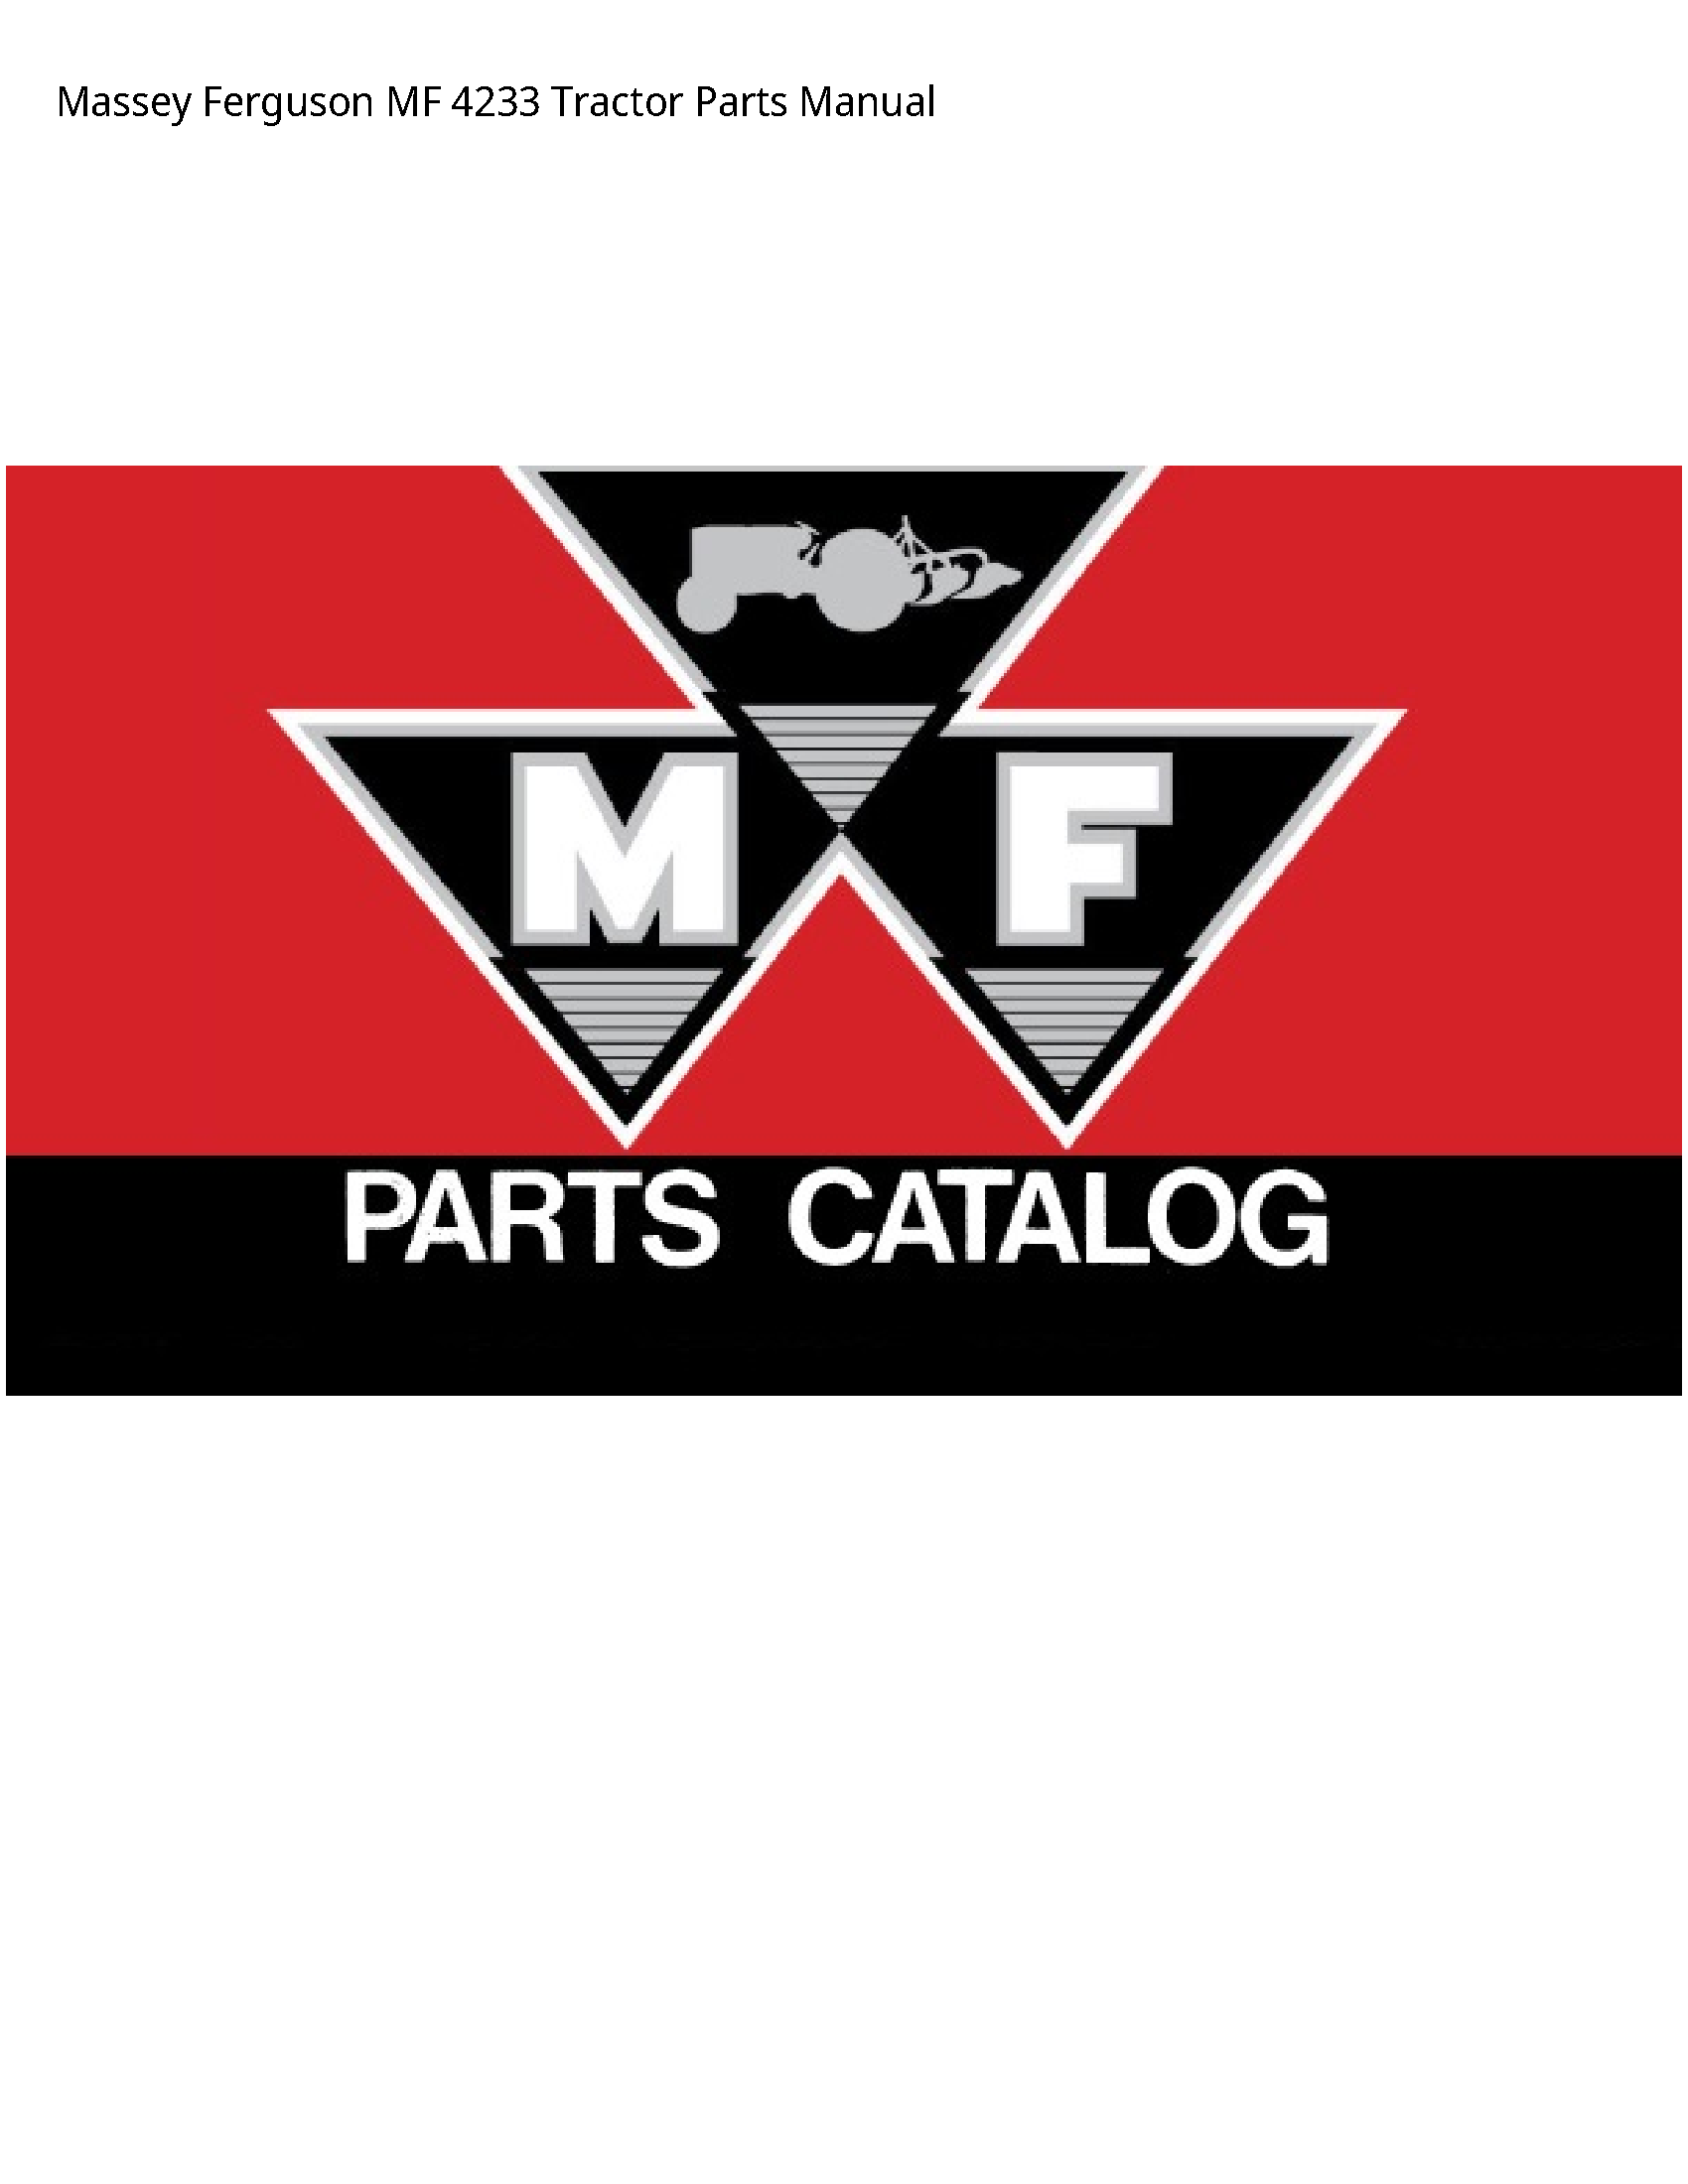 Massey Ferguson 4233 MF Tractor Parts manual